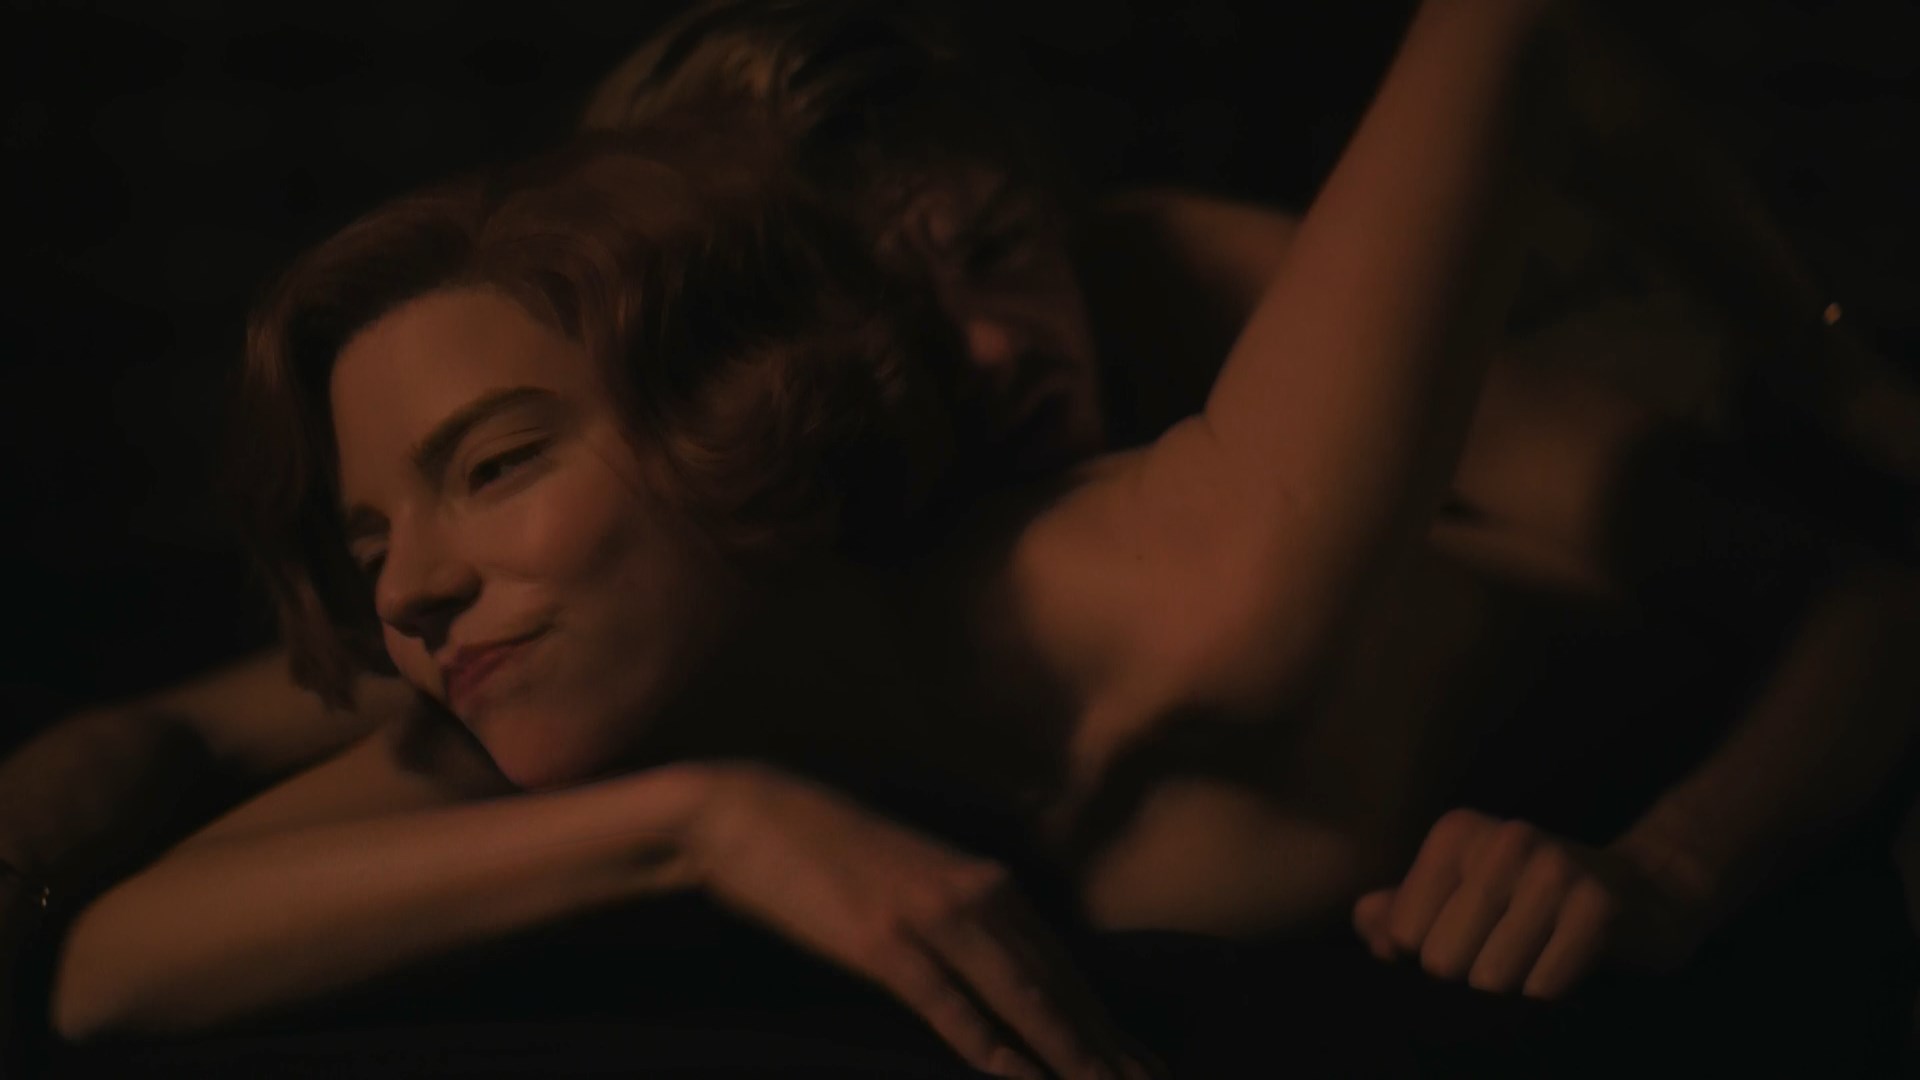 Ana joy taylor sex scene